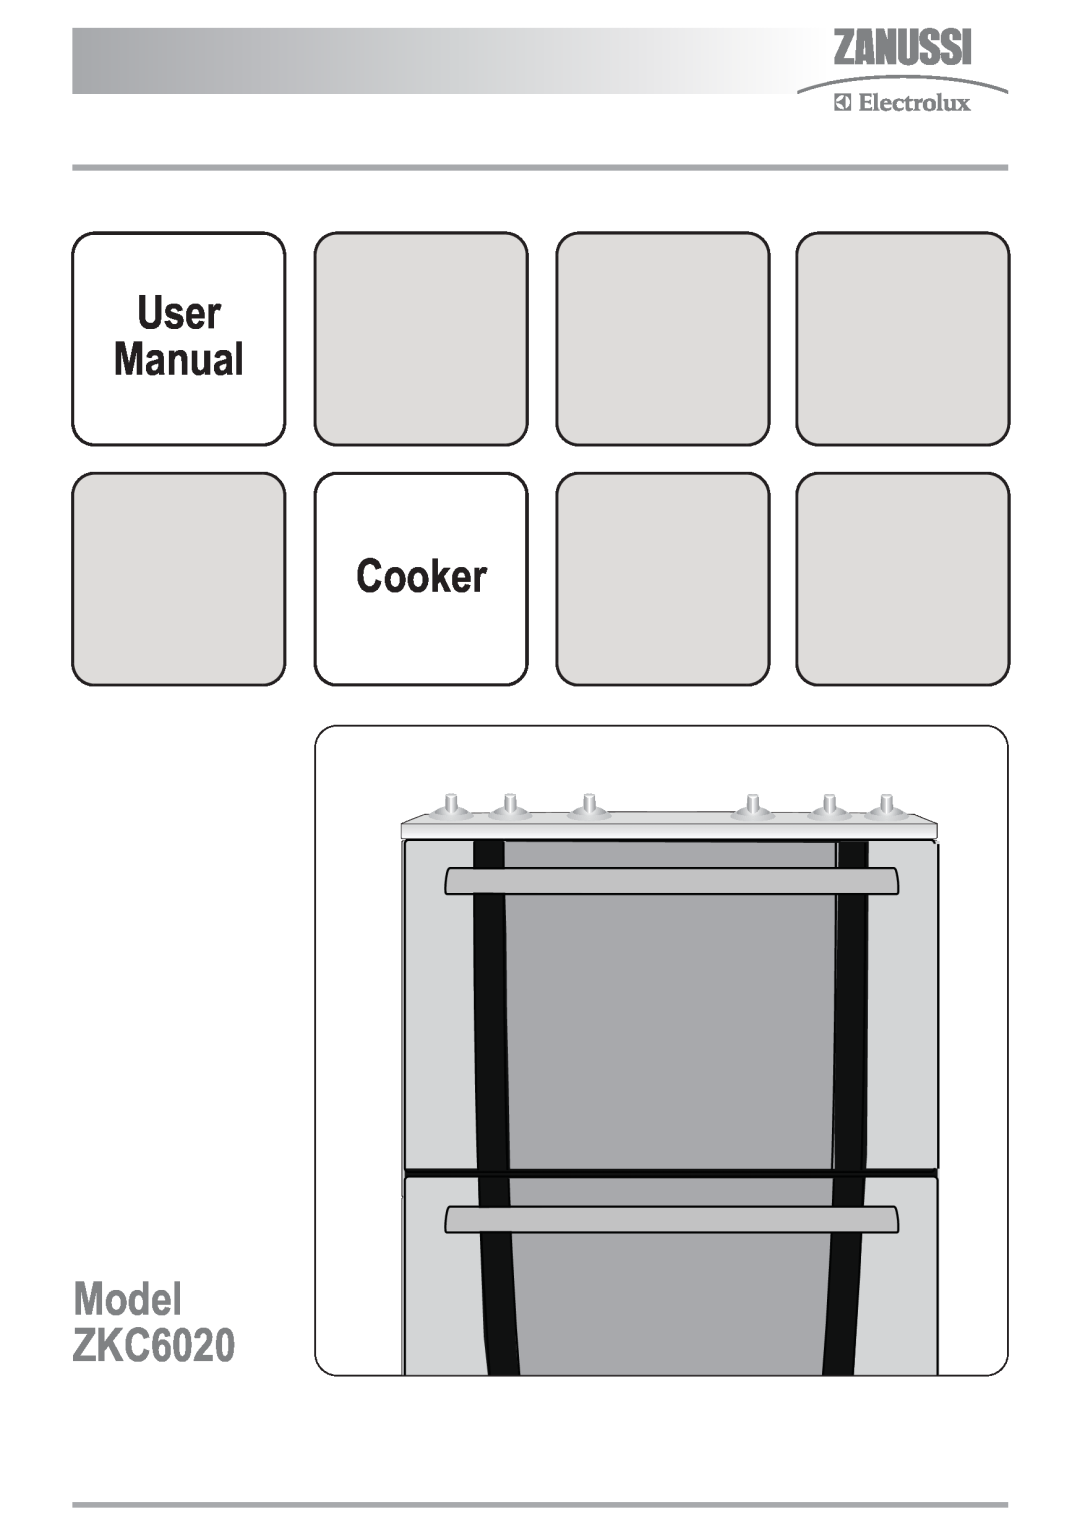 Zanussi user manual User Manual Cooker, Model ZKC6020 